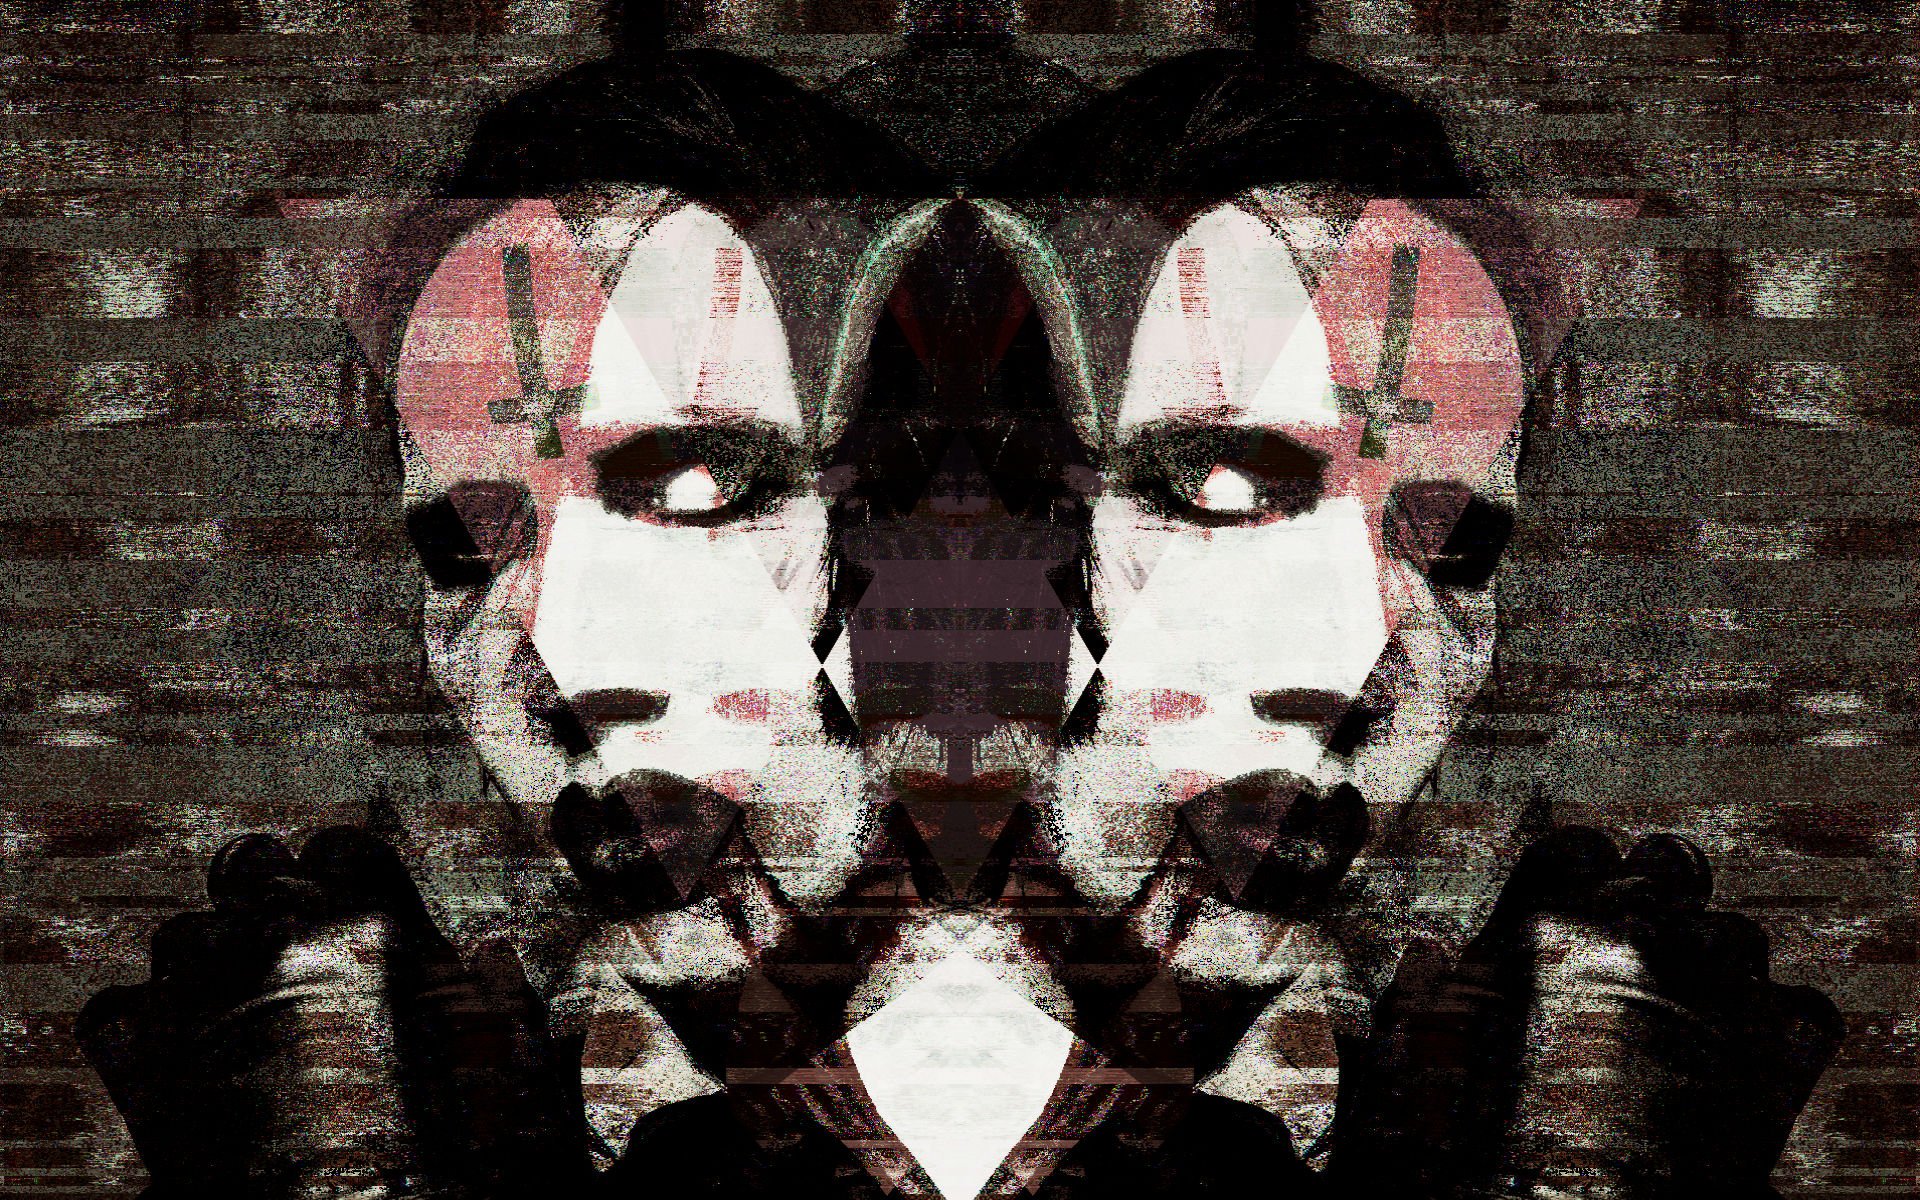 marilyn, Manson, Industrial, Metal, Heavy, Shock, Glam, Gothic Wallpaper